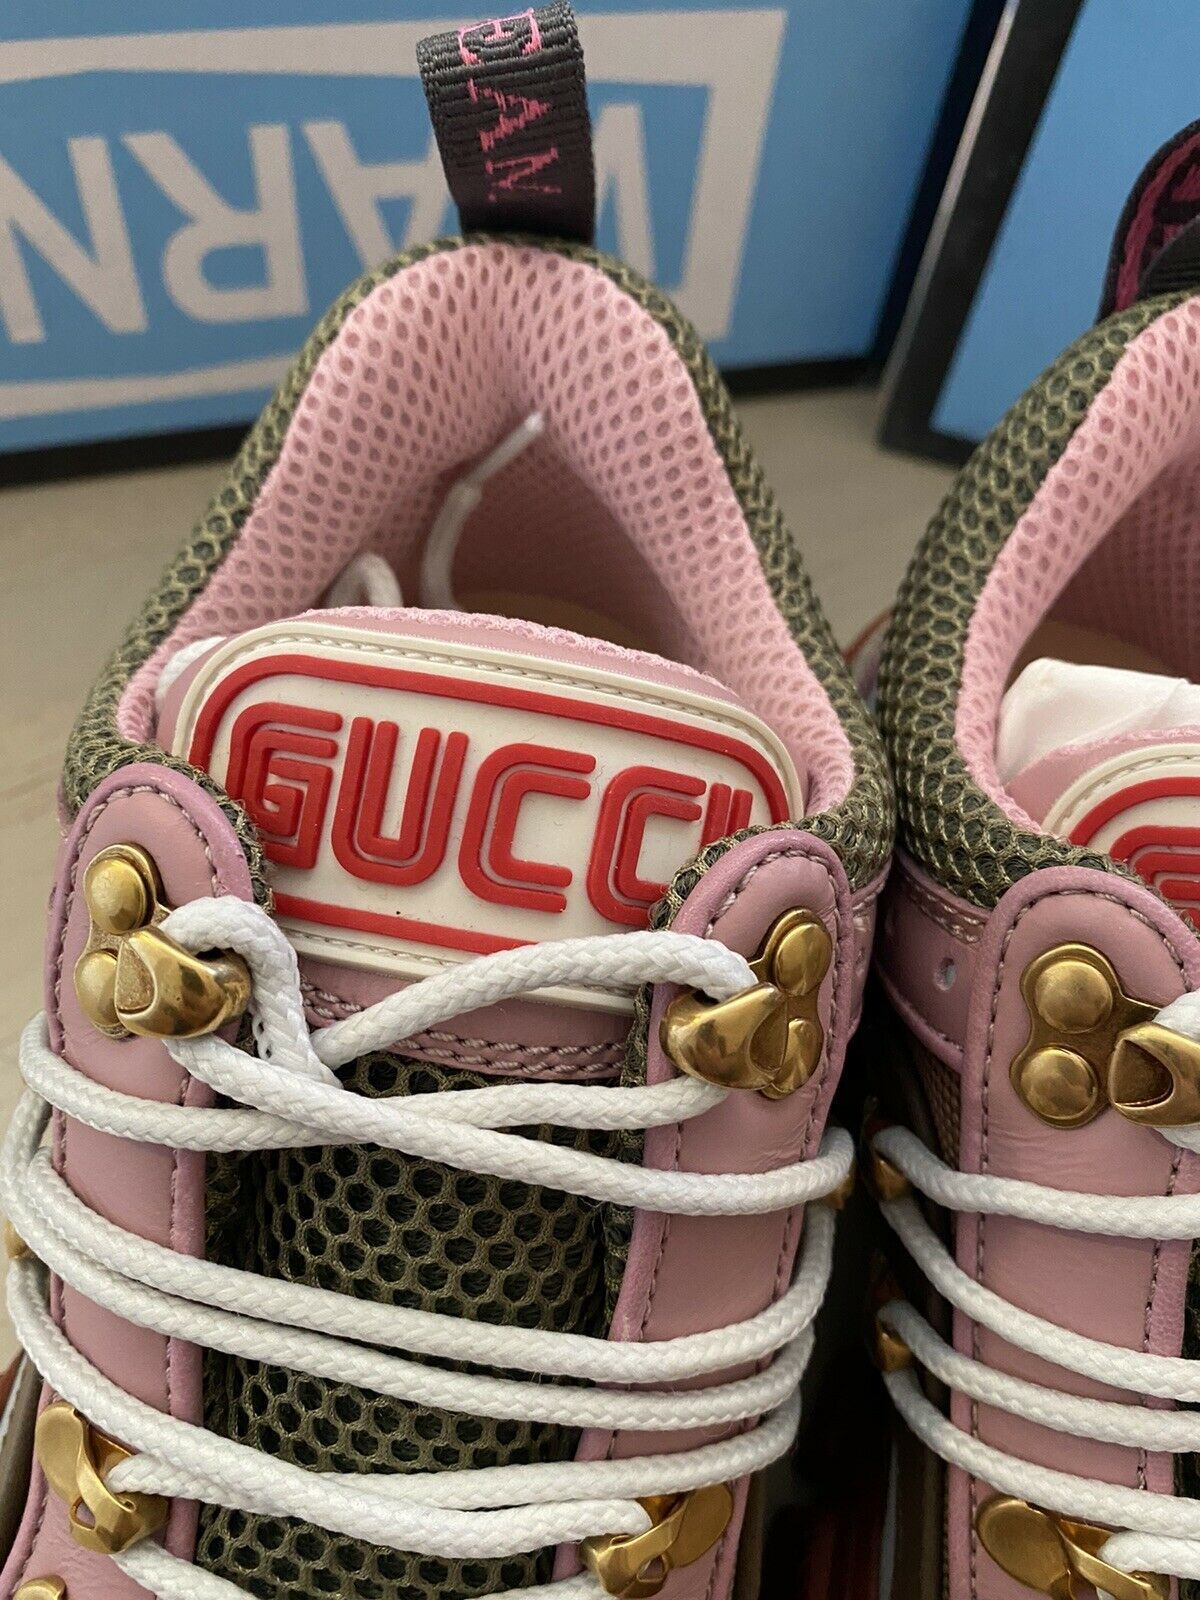 NIB $1300 Gucci Women’s Sneakers Shoes Military Green/Red/Pink 4 US/34 Eu